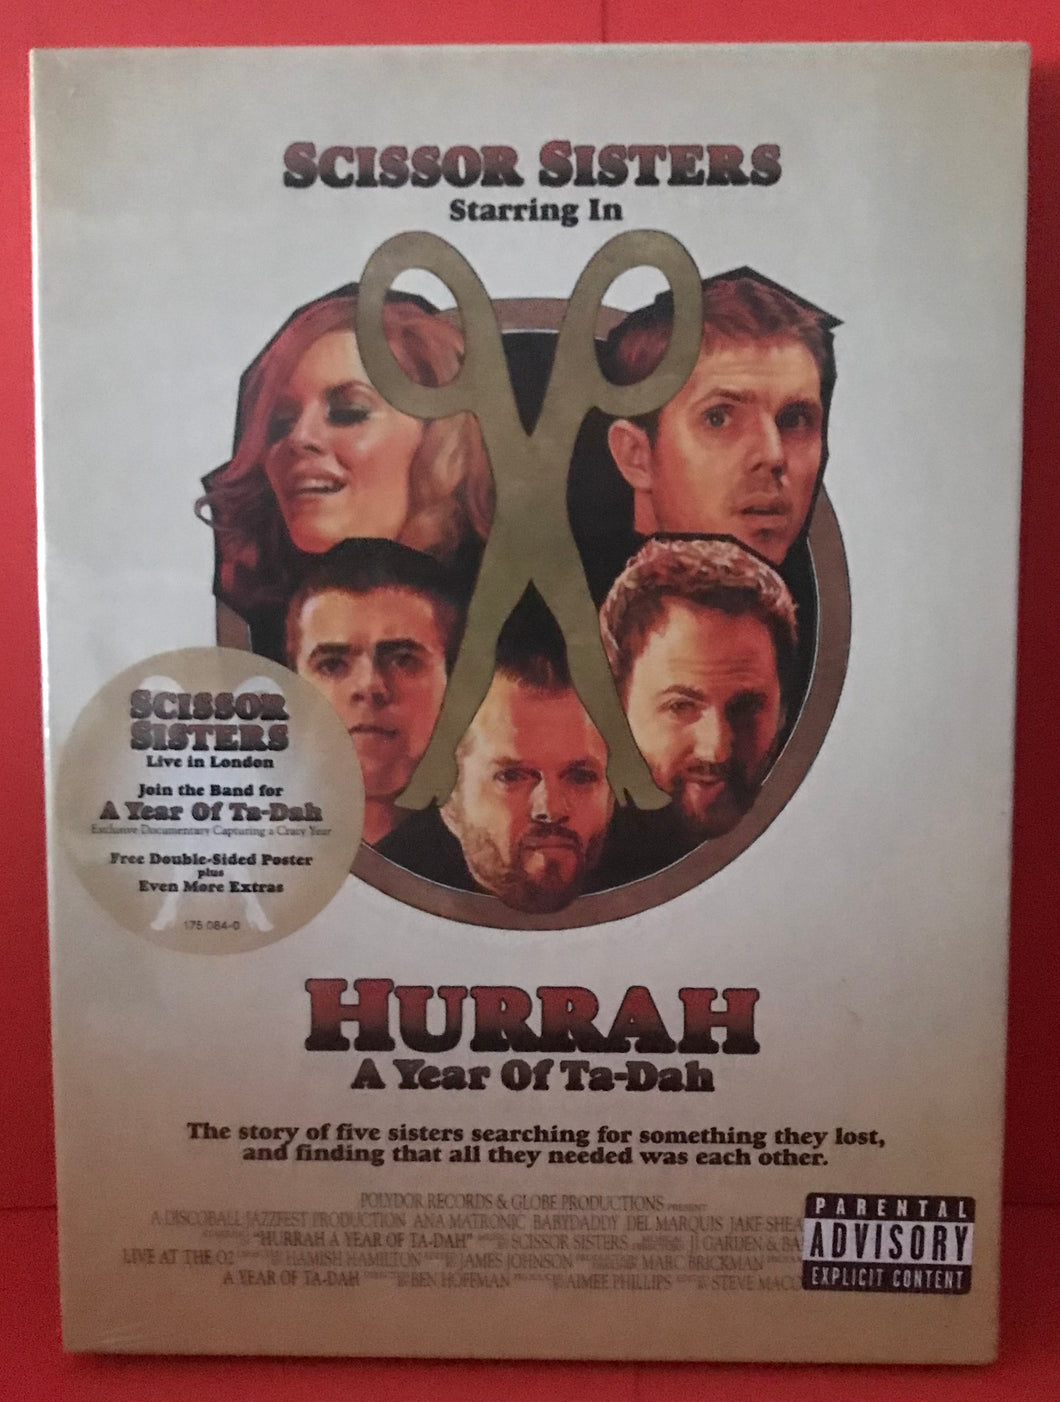 SCISSOR SISTERS - HURRAH - A YEAR OF TA-DAH - DVD (SEALED)